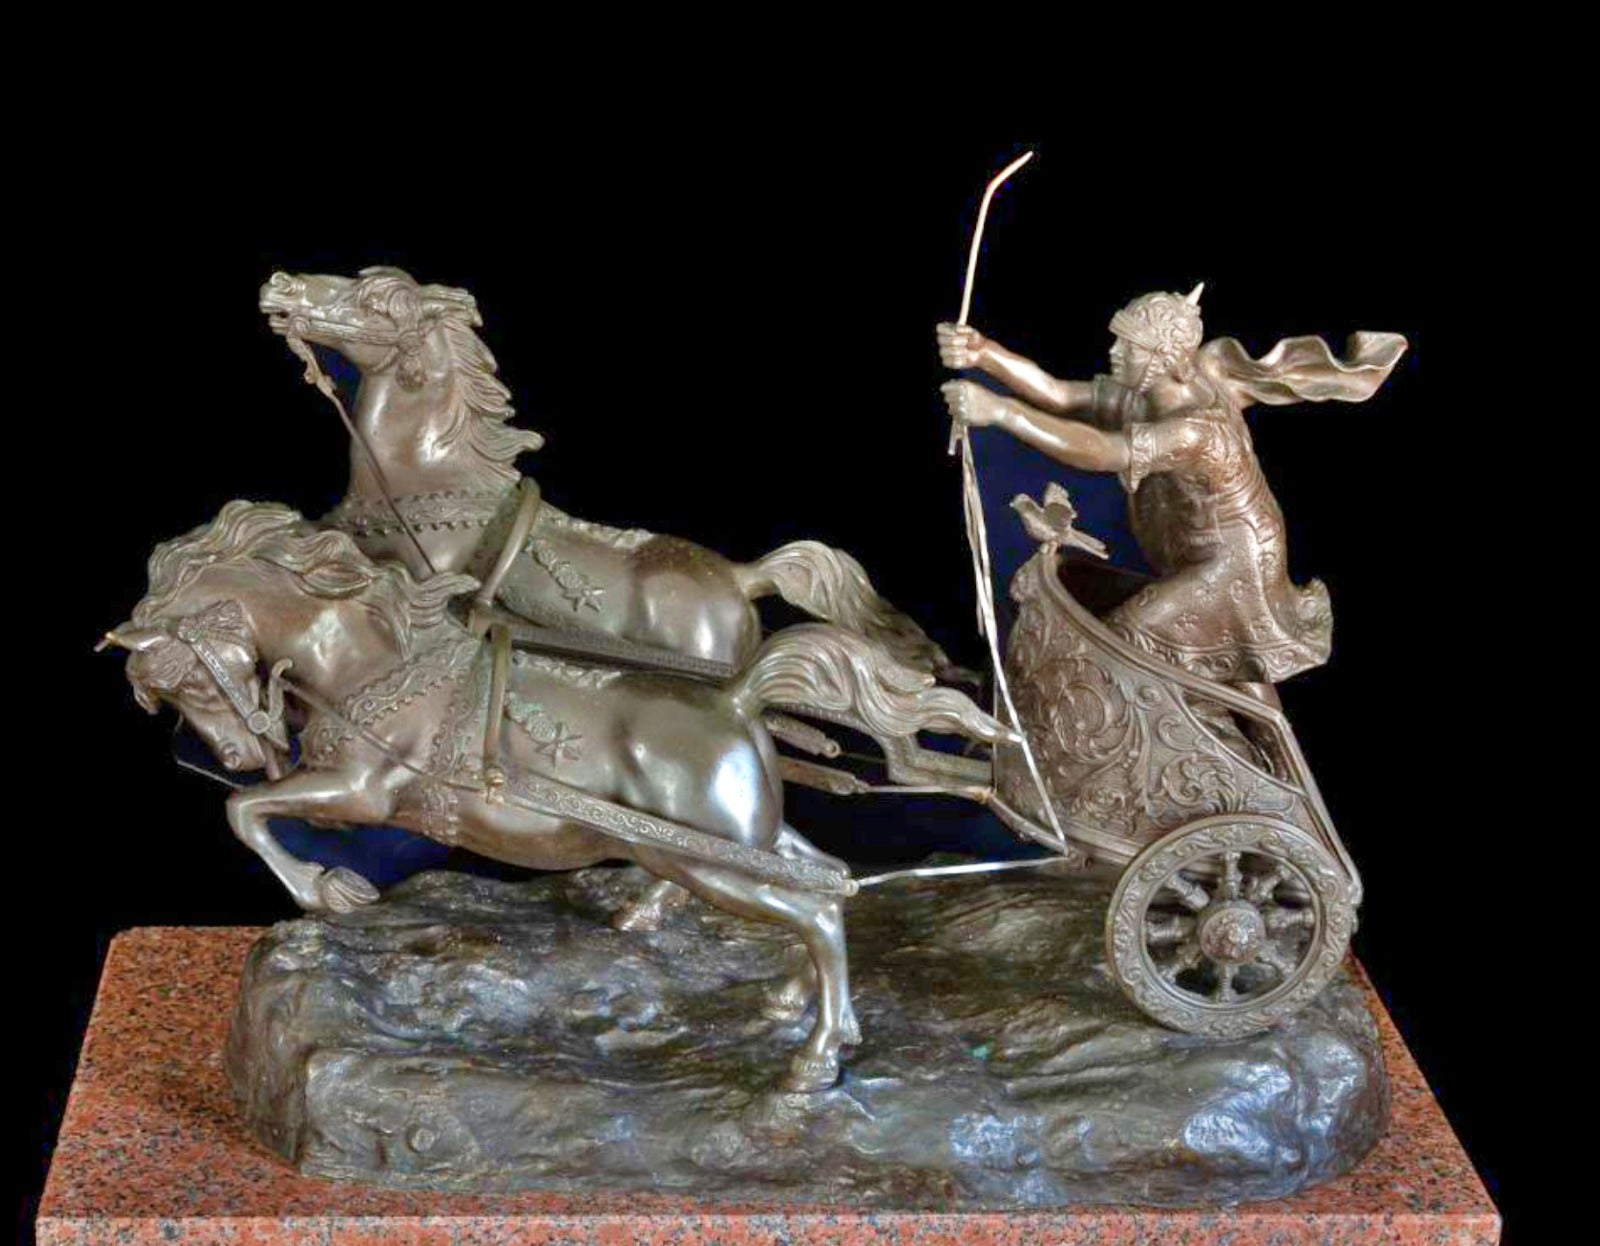 Roman bronze sculpture
Depicts Roman Chariot
19th century
Measures: cm. 33 × 66 H. 50
Good conditions.